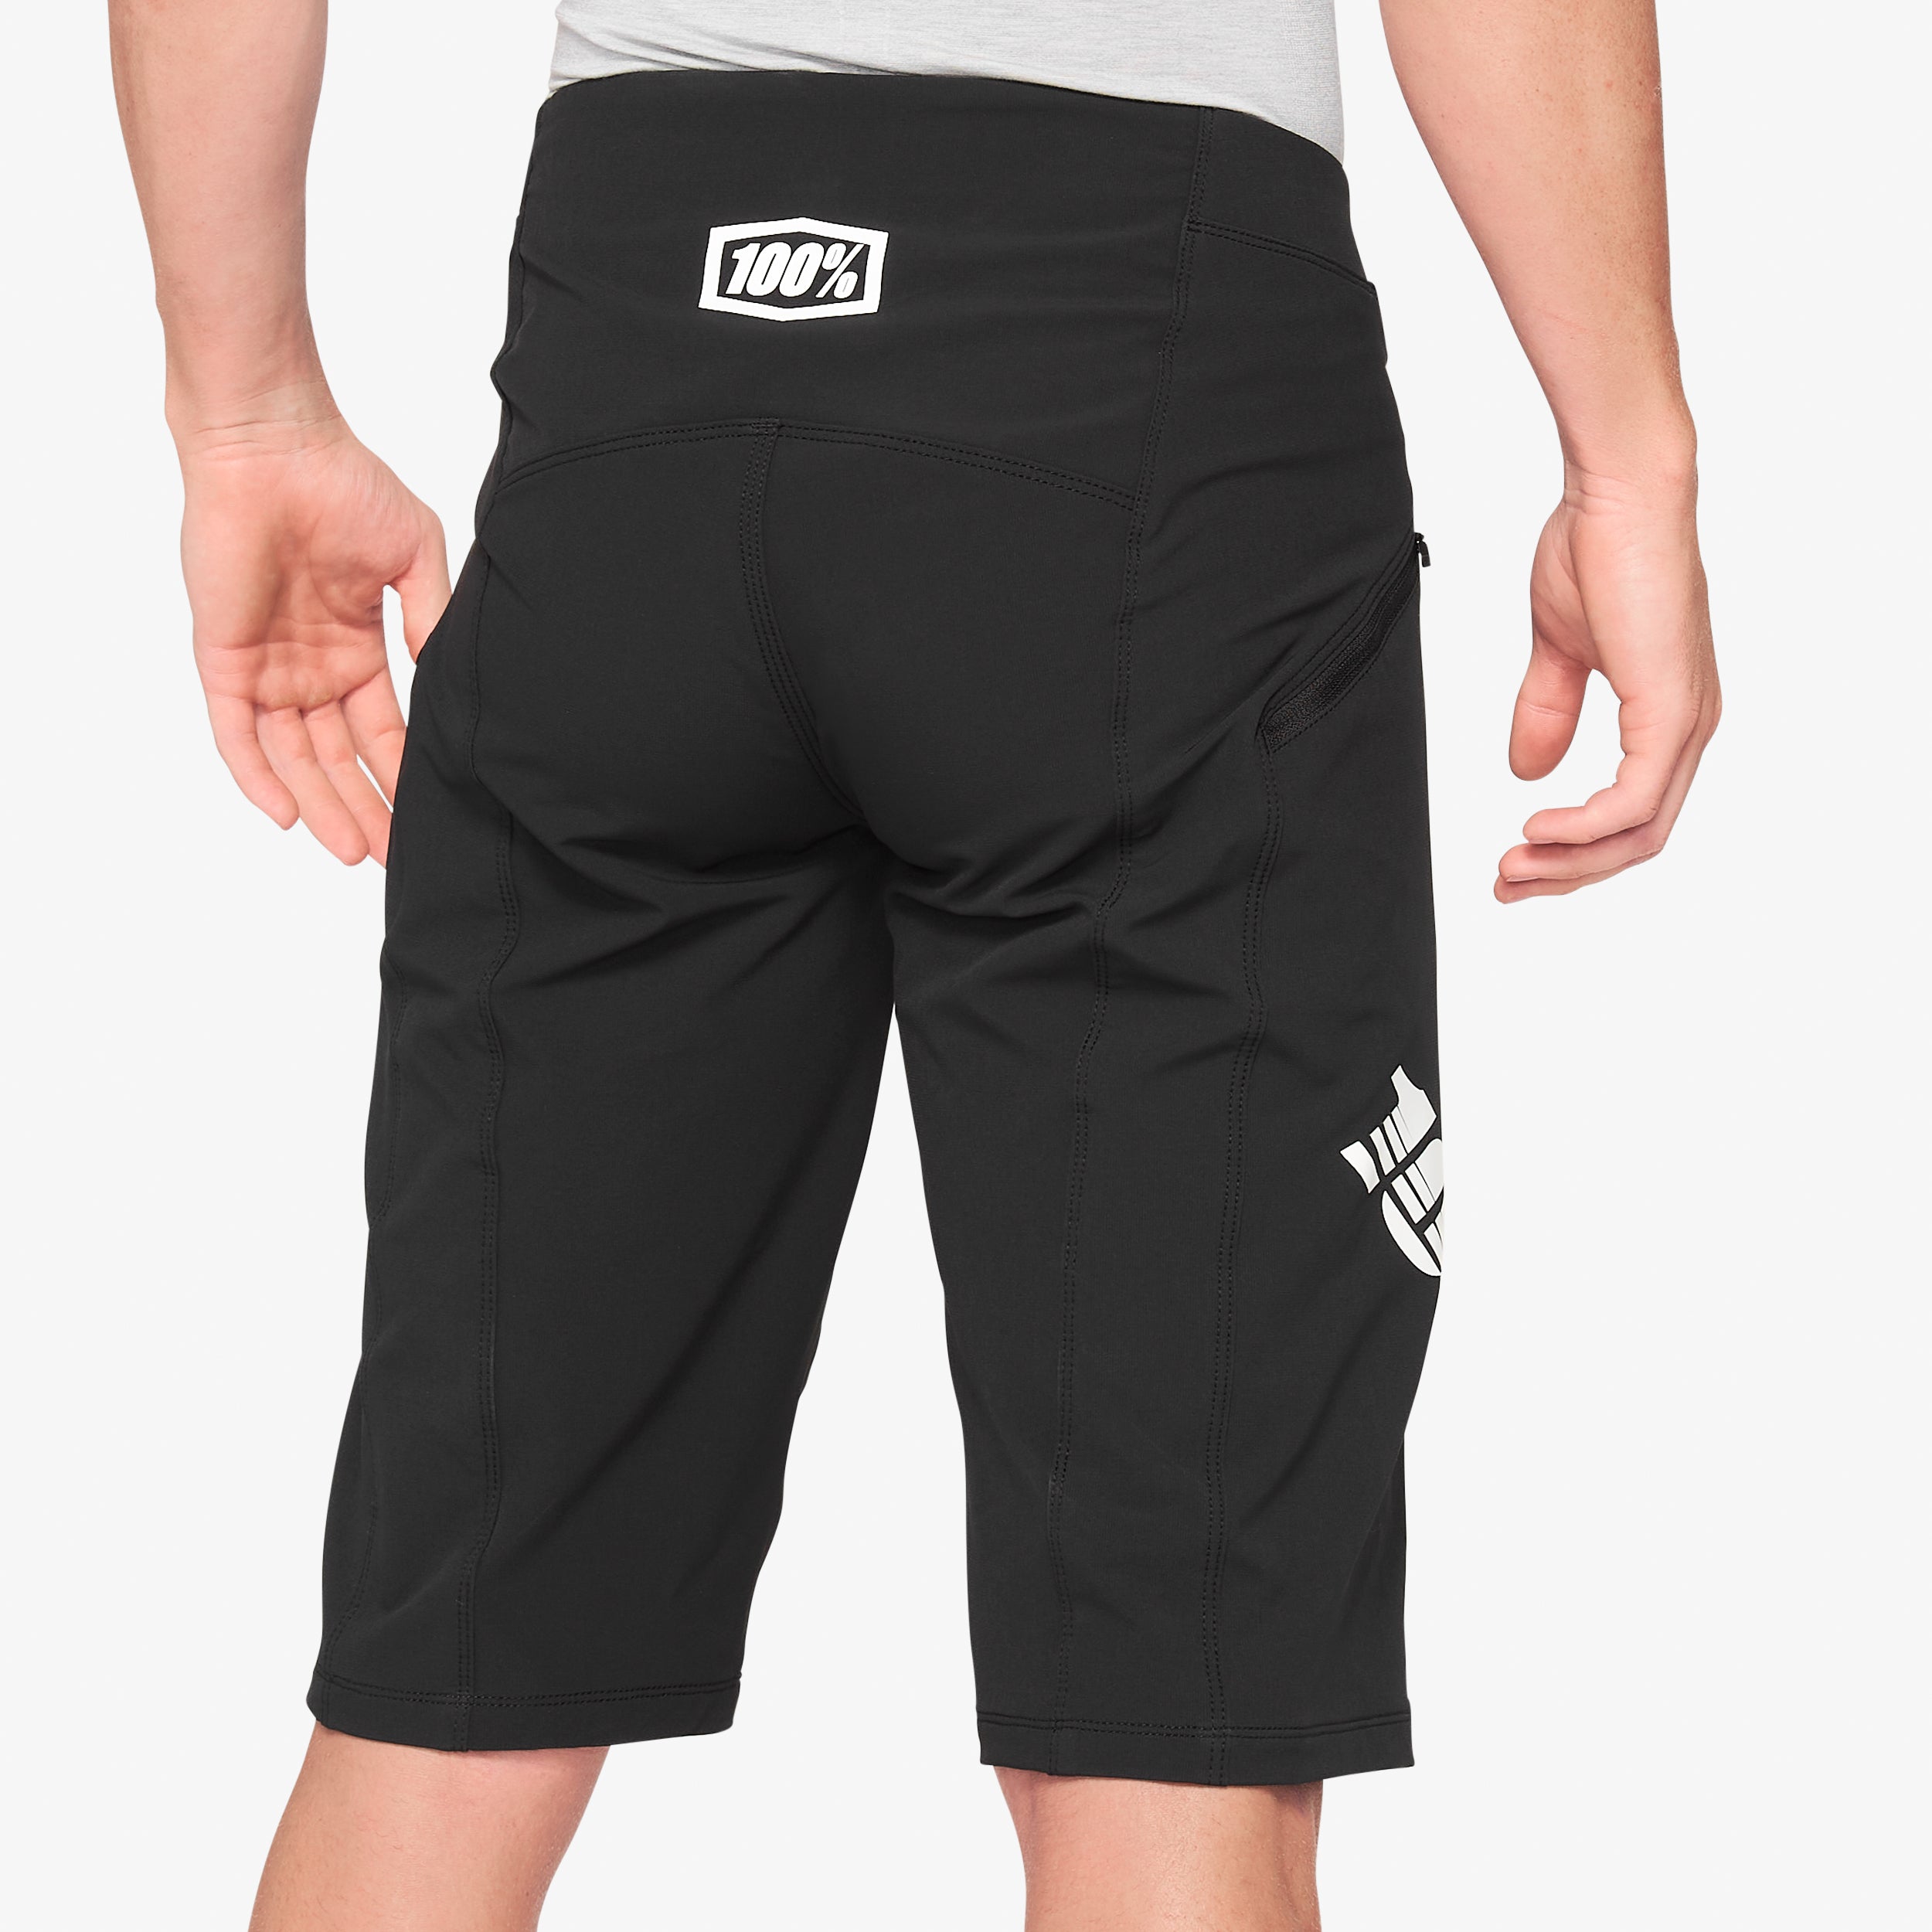 R-CORE-X Shorts Black - Secondary